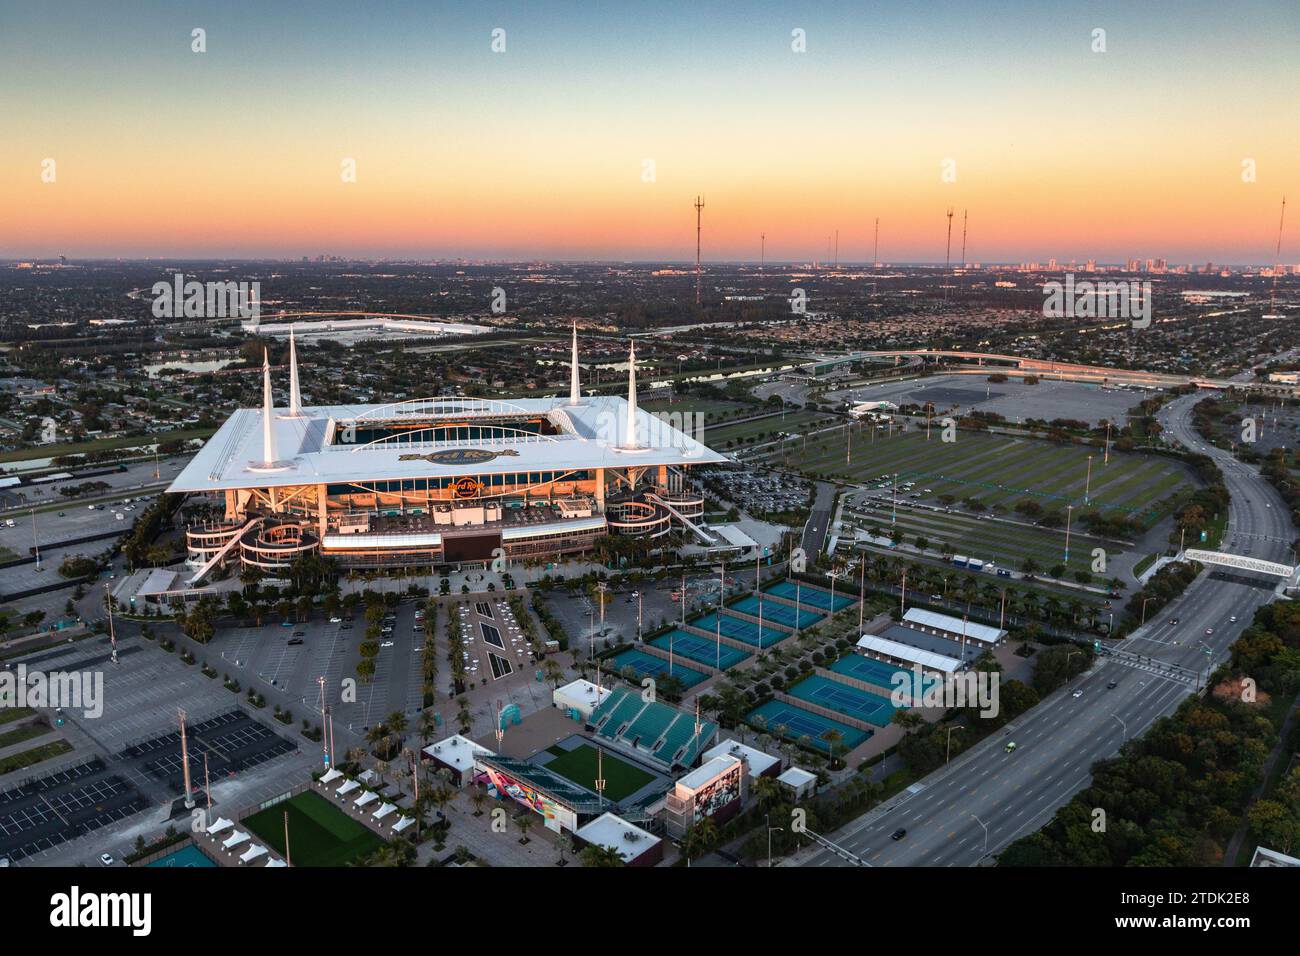 Aerial view of the Hard Rock stadium at dusk, Miami, Florida, USA Stock Photo